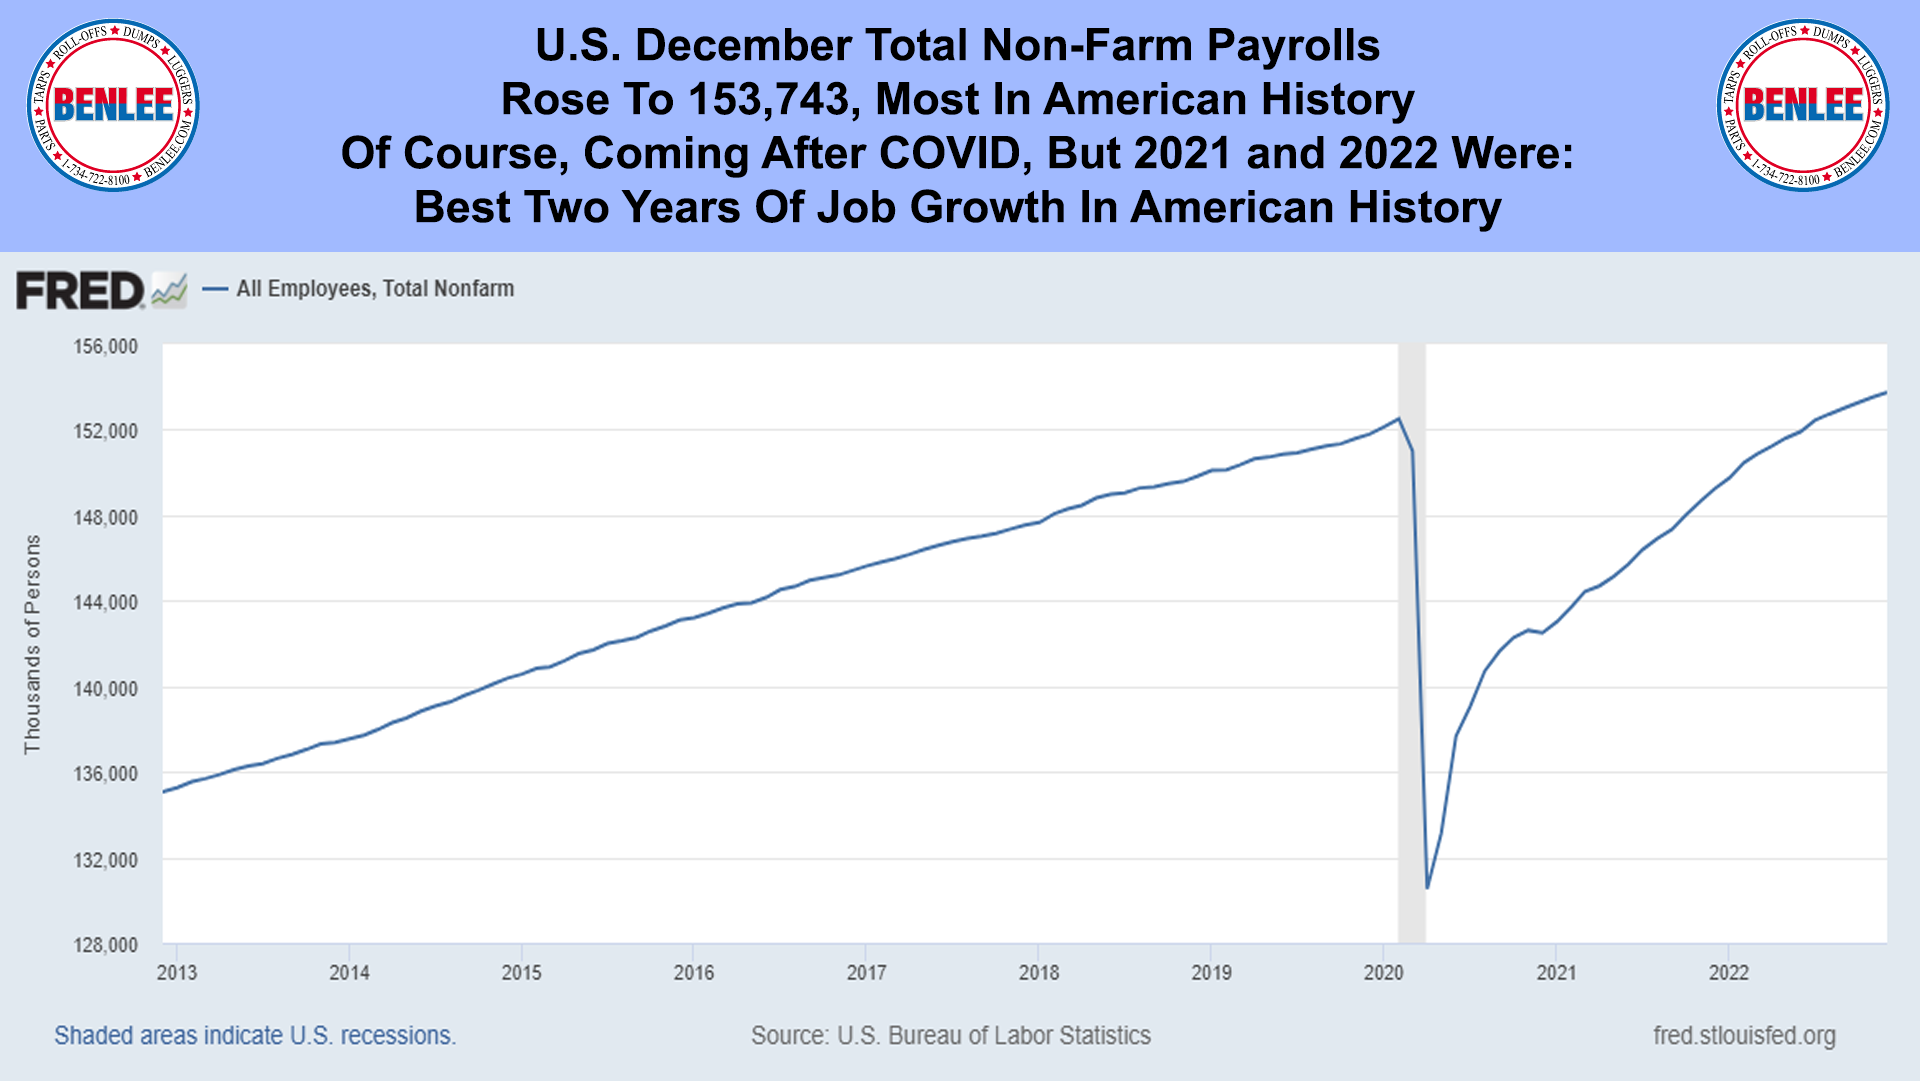 U.S. December Total Non-Farm Payrolls